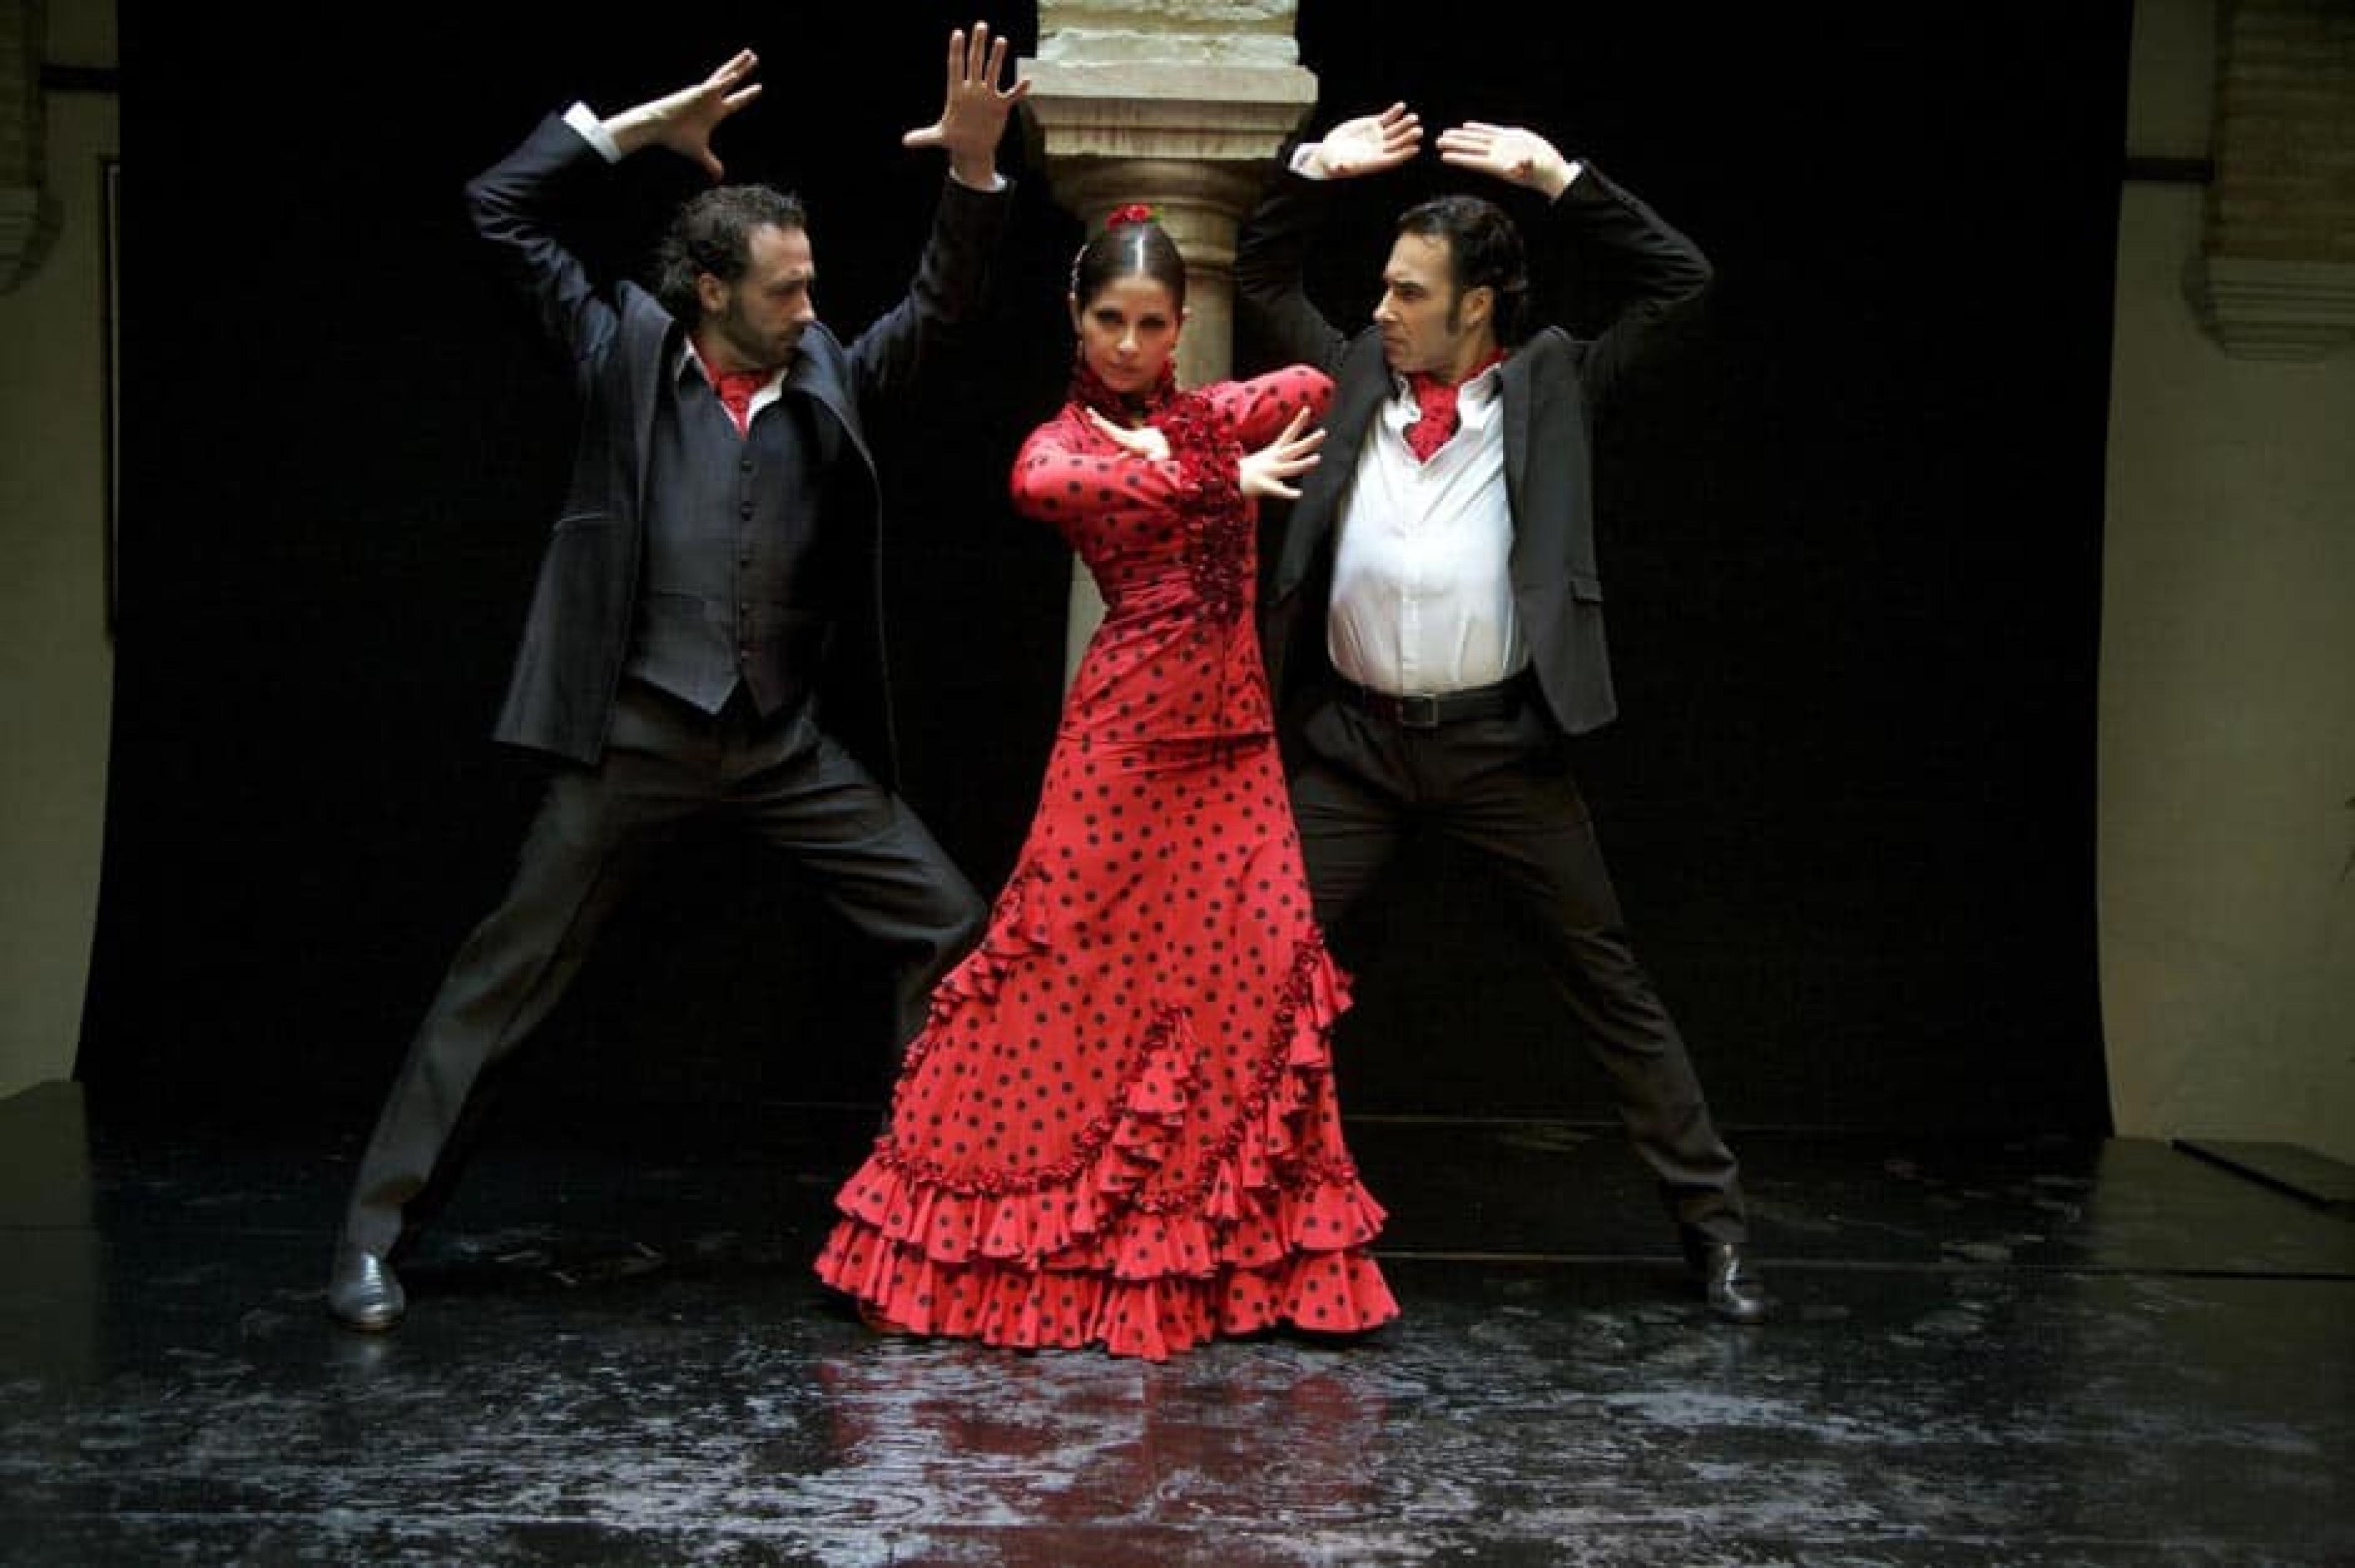 Dancing at Museo de Baile Flamenco ,Seville, Spain